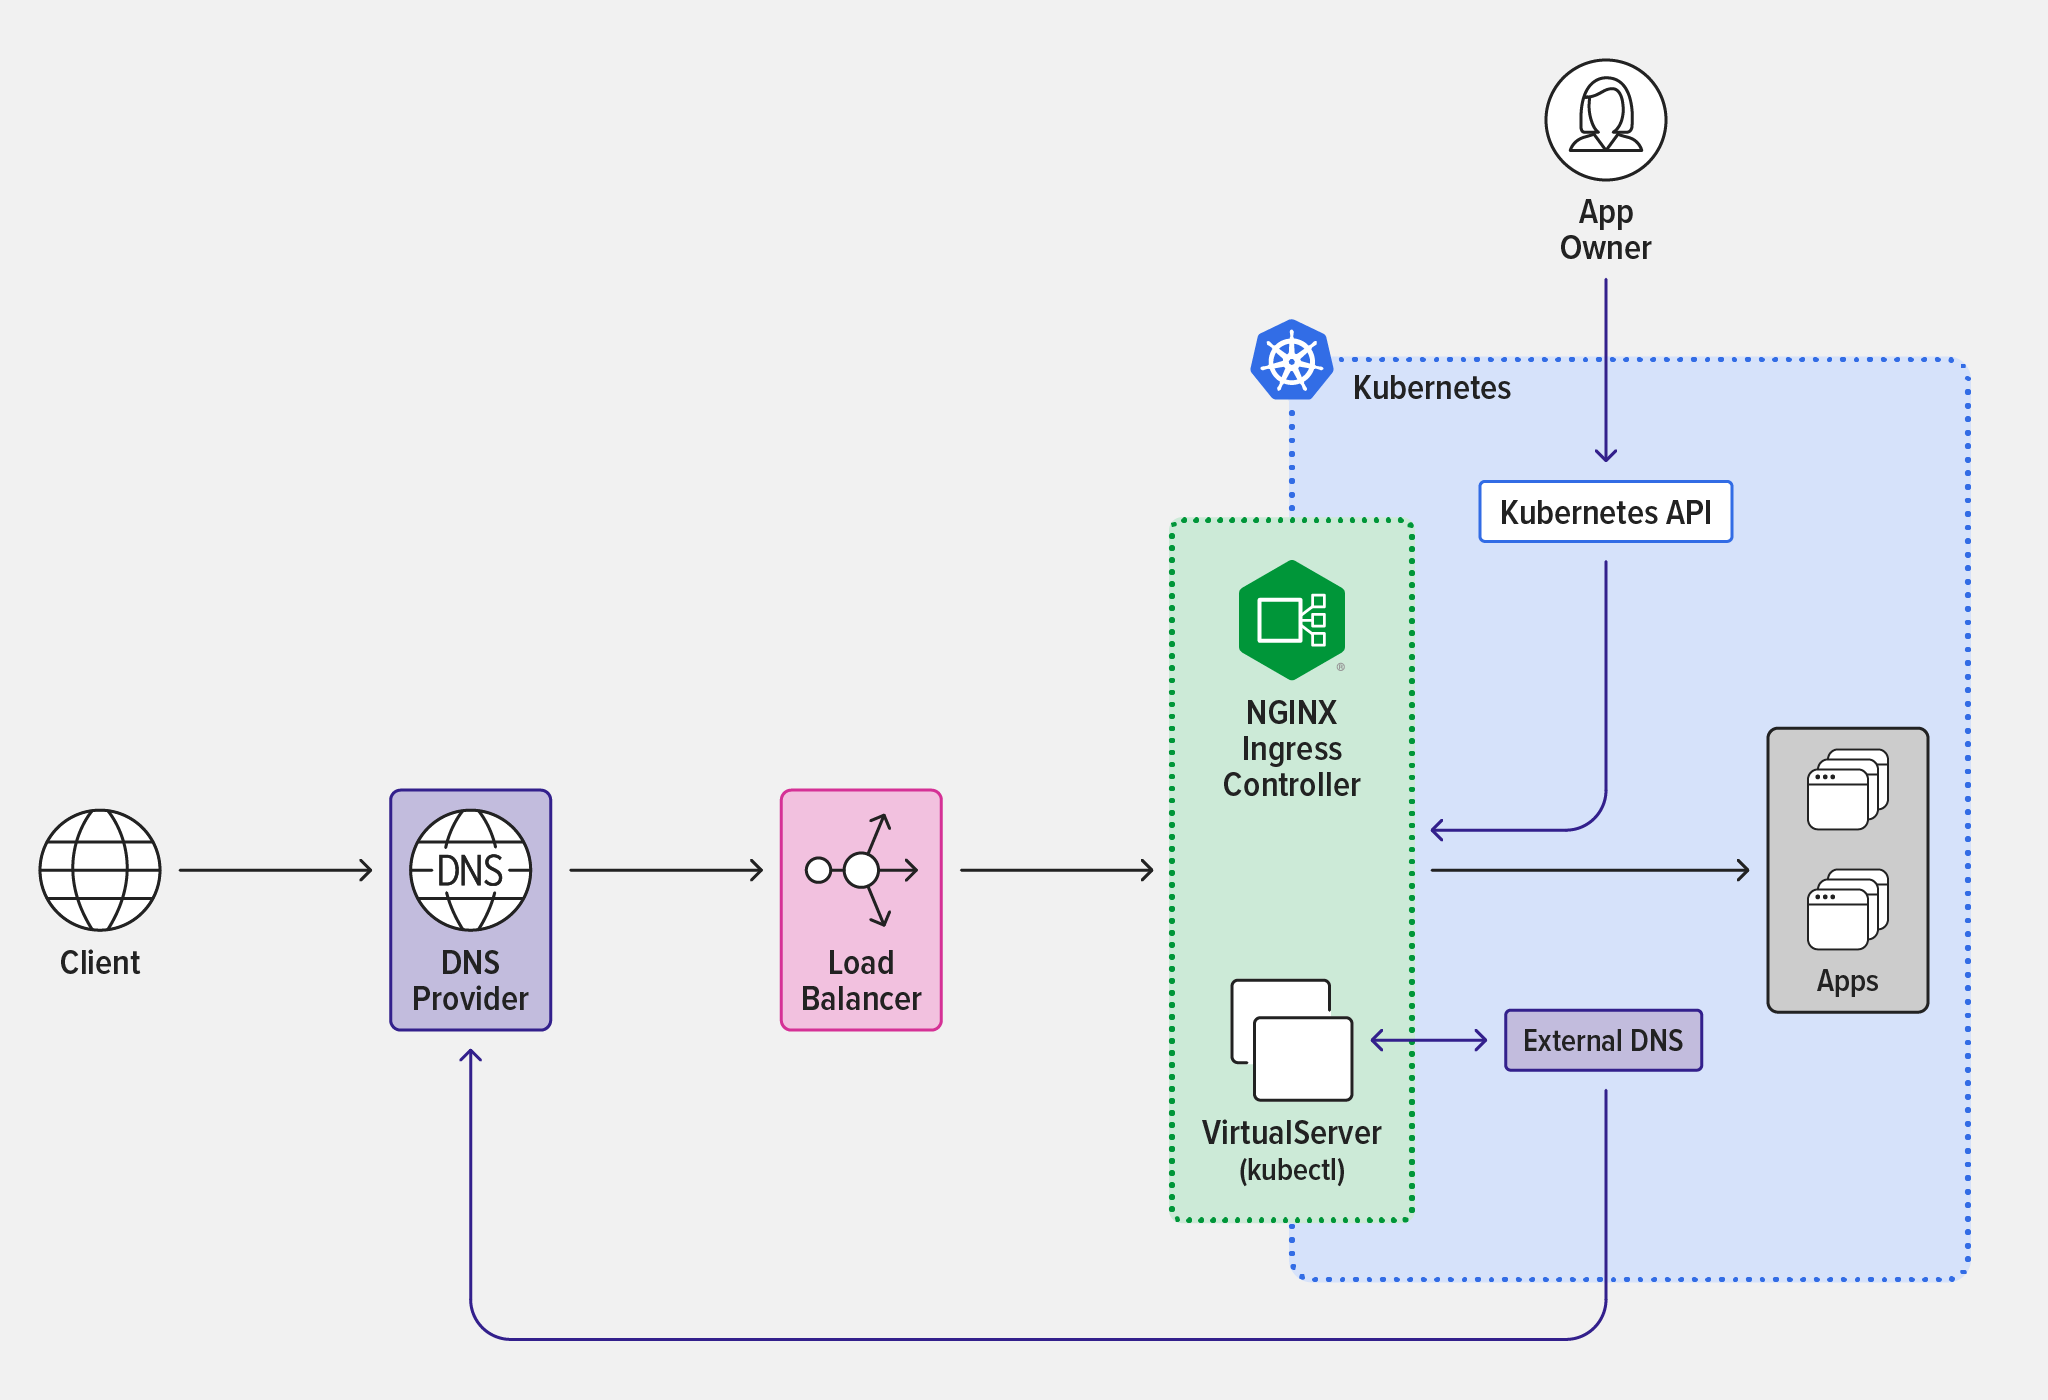 Diagram how ExternalDNS Kubernetes deployment interacts NGINX Ingress Controller with DNS provider